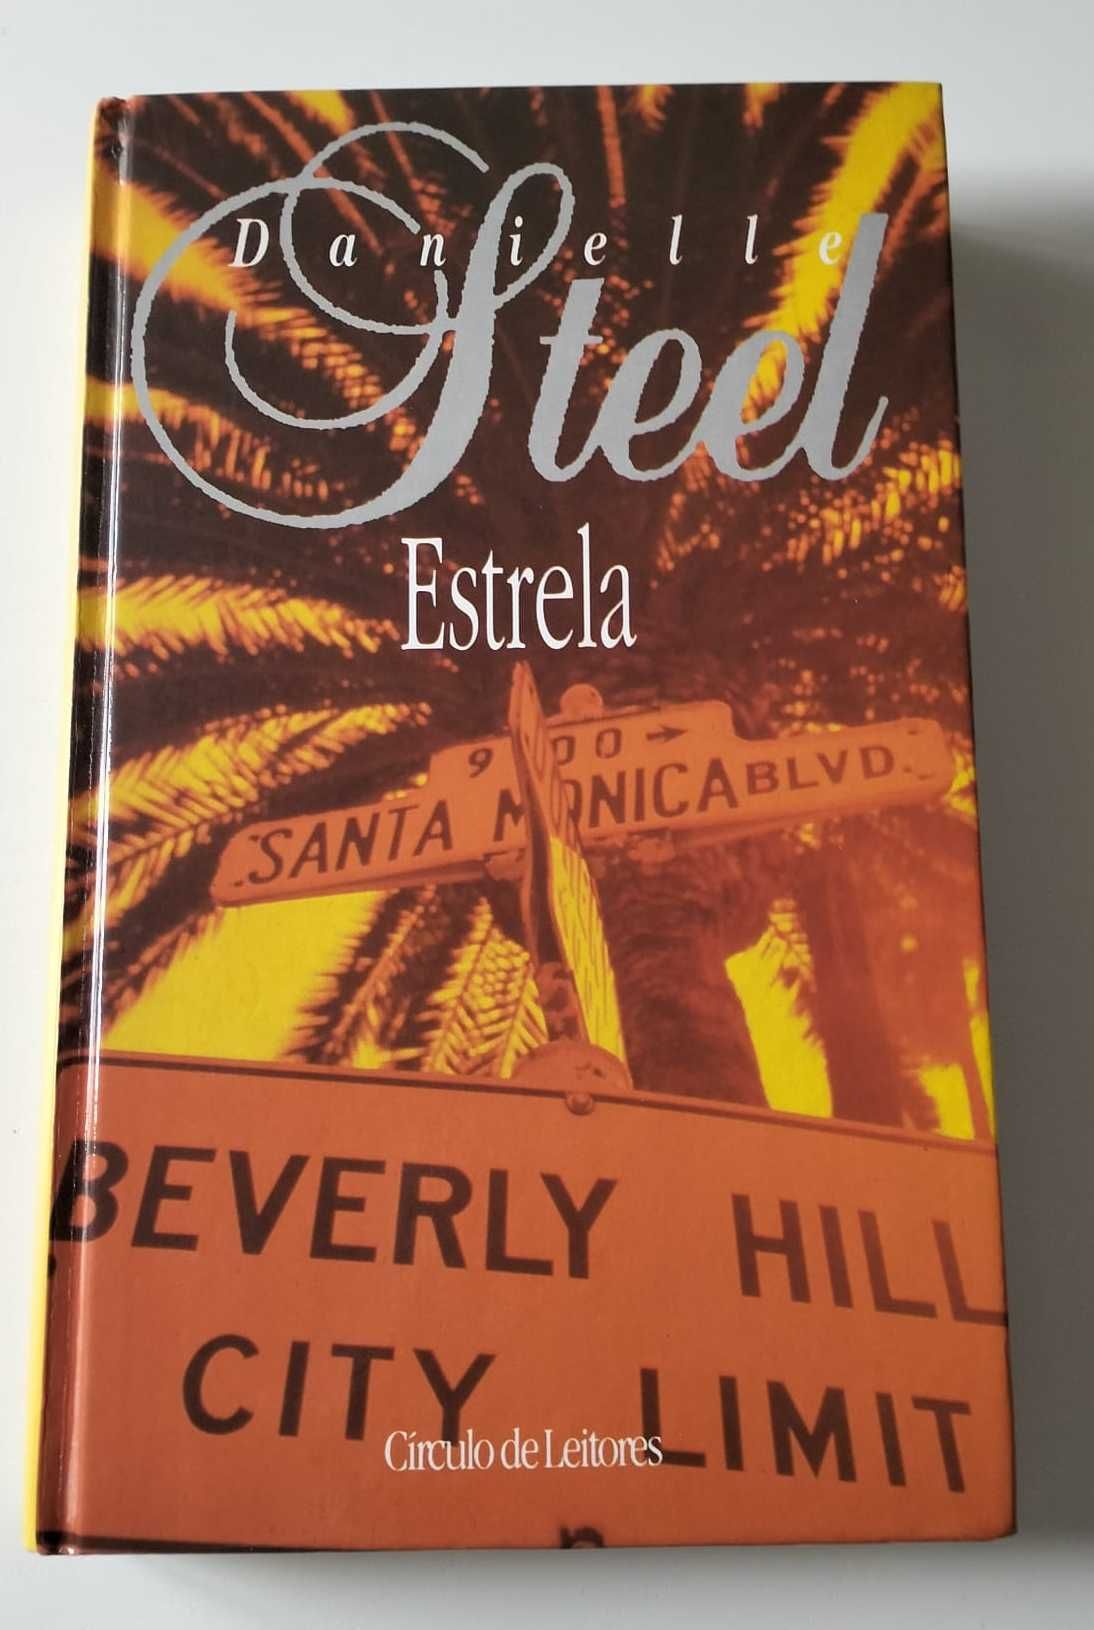 Livro "Estrela" - Danielle Steel